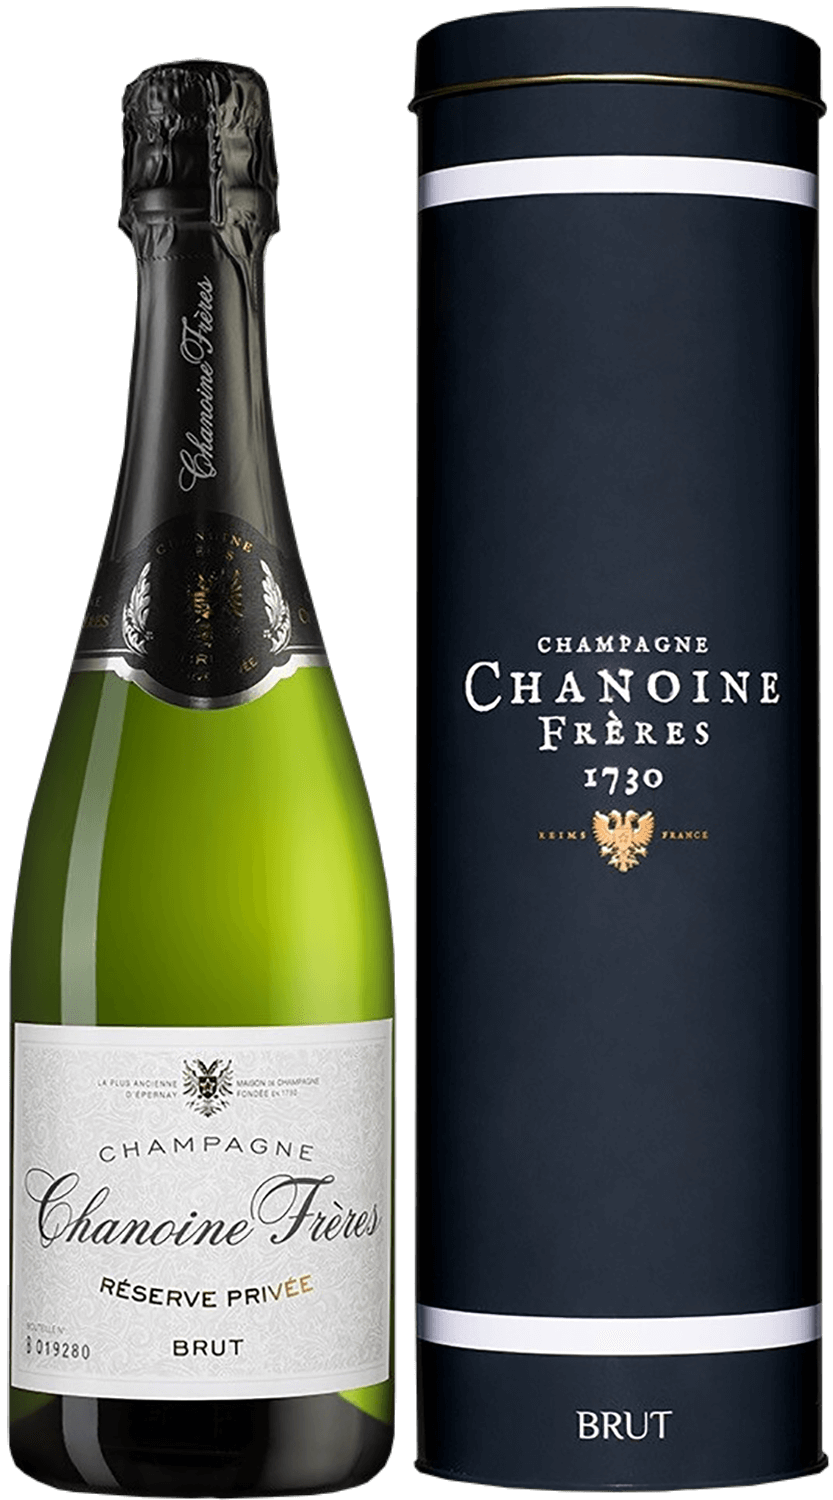 Reserve Privee Brut Champagne AOC Chanoine Freres (gift box) les 7 extra brut champagne aoс laherte freres